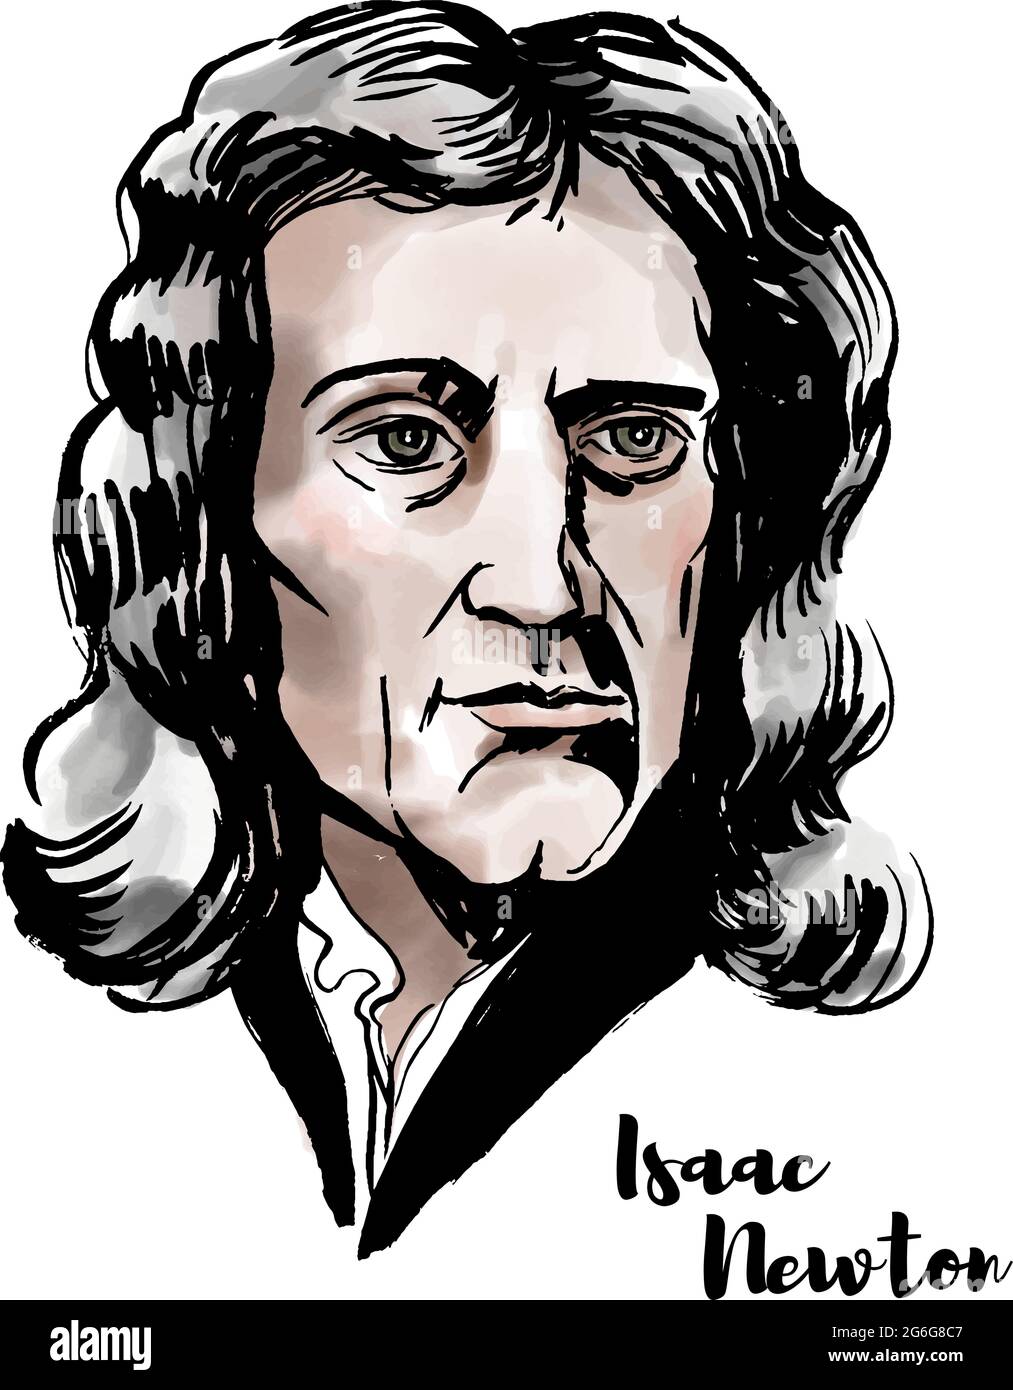 Isaac Newton Aquarell-Vektor-Porträt mit Farbkonturen. Englischer ...